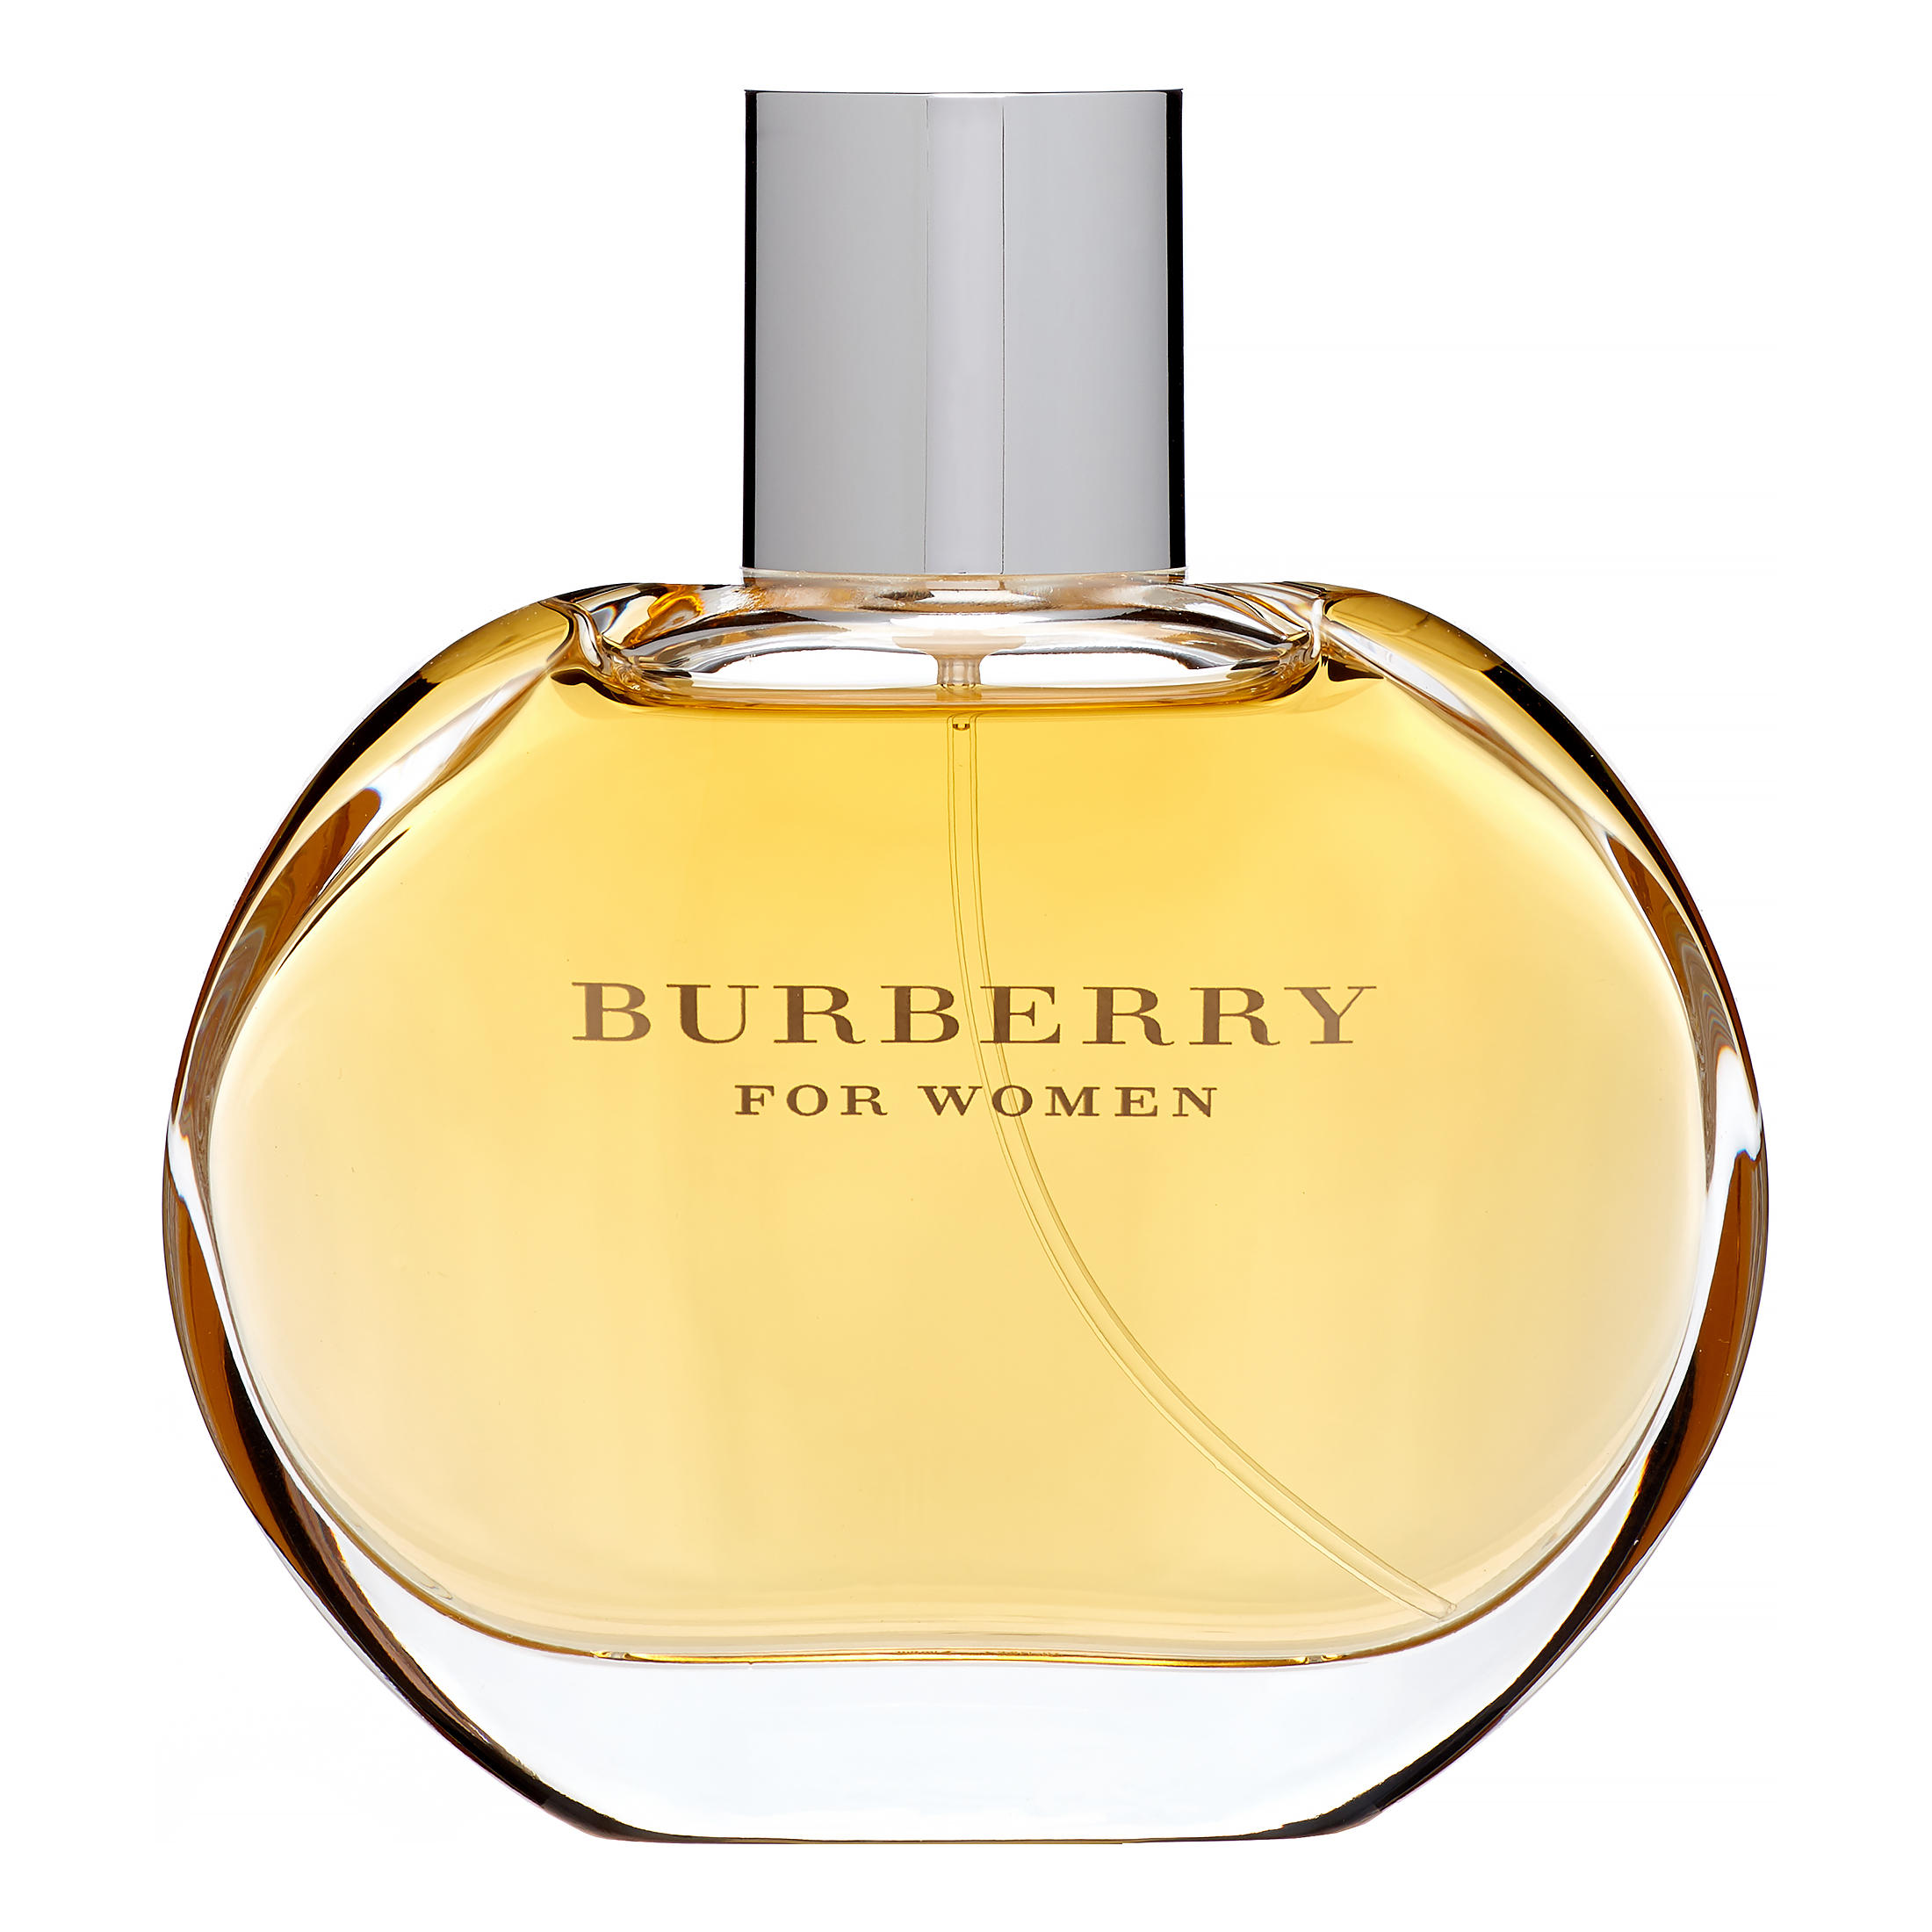 Burberry Classic Eau De Parfum, Perfume for Women, 3.3 oz - image 1 of 6